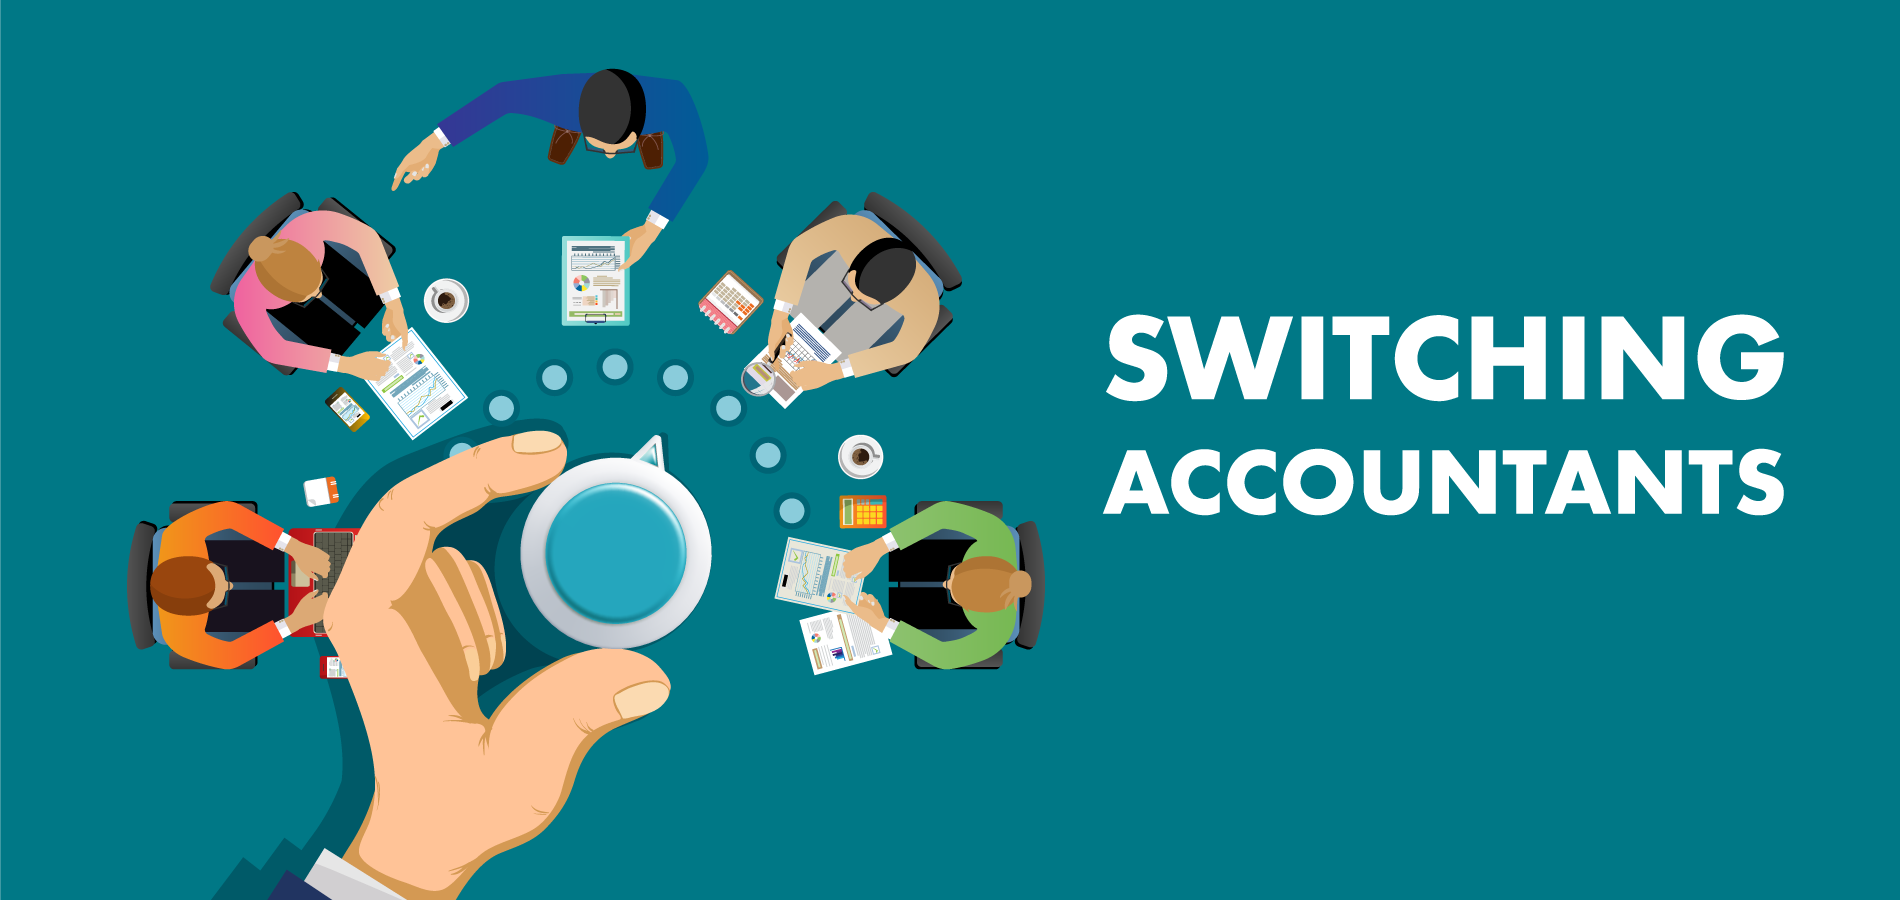 Switching accountants